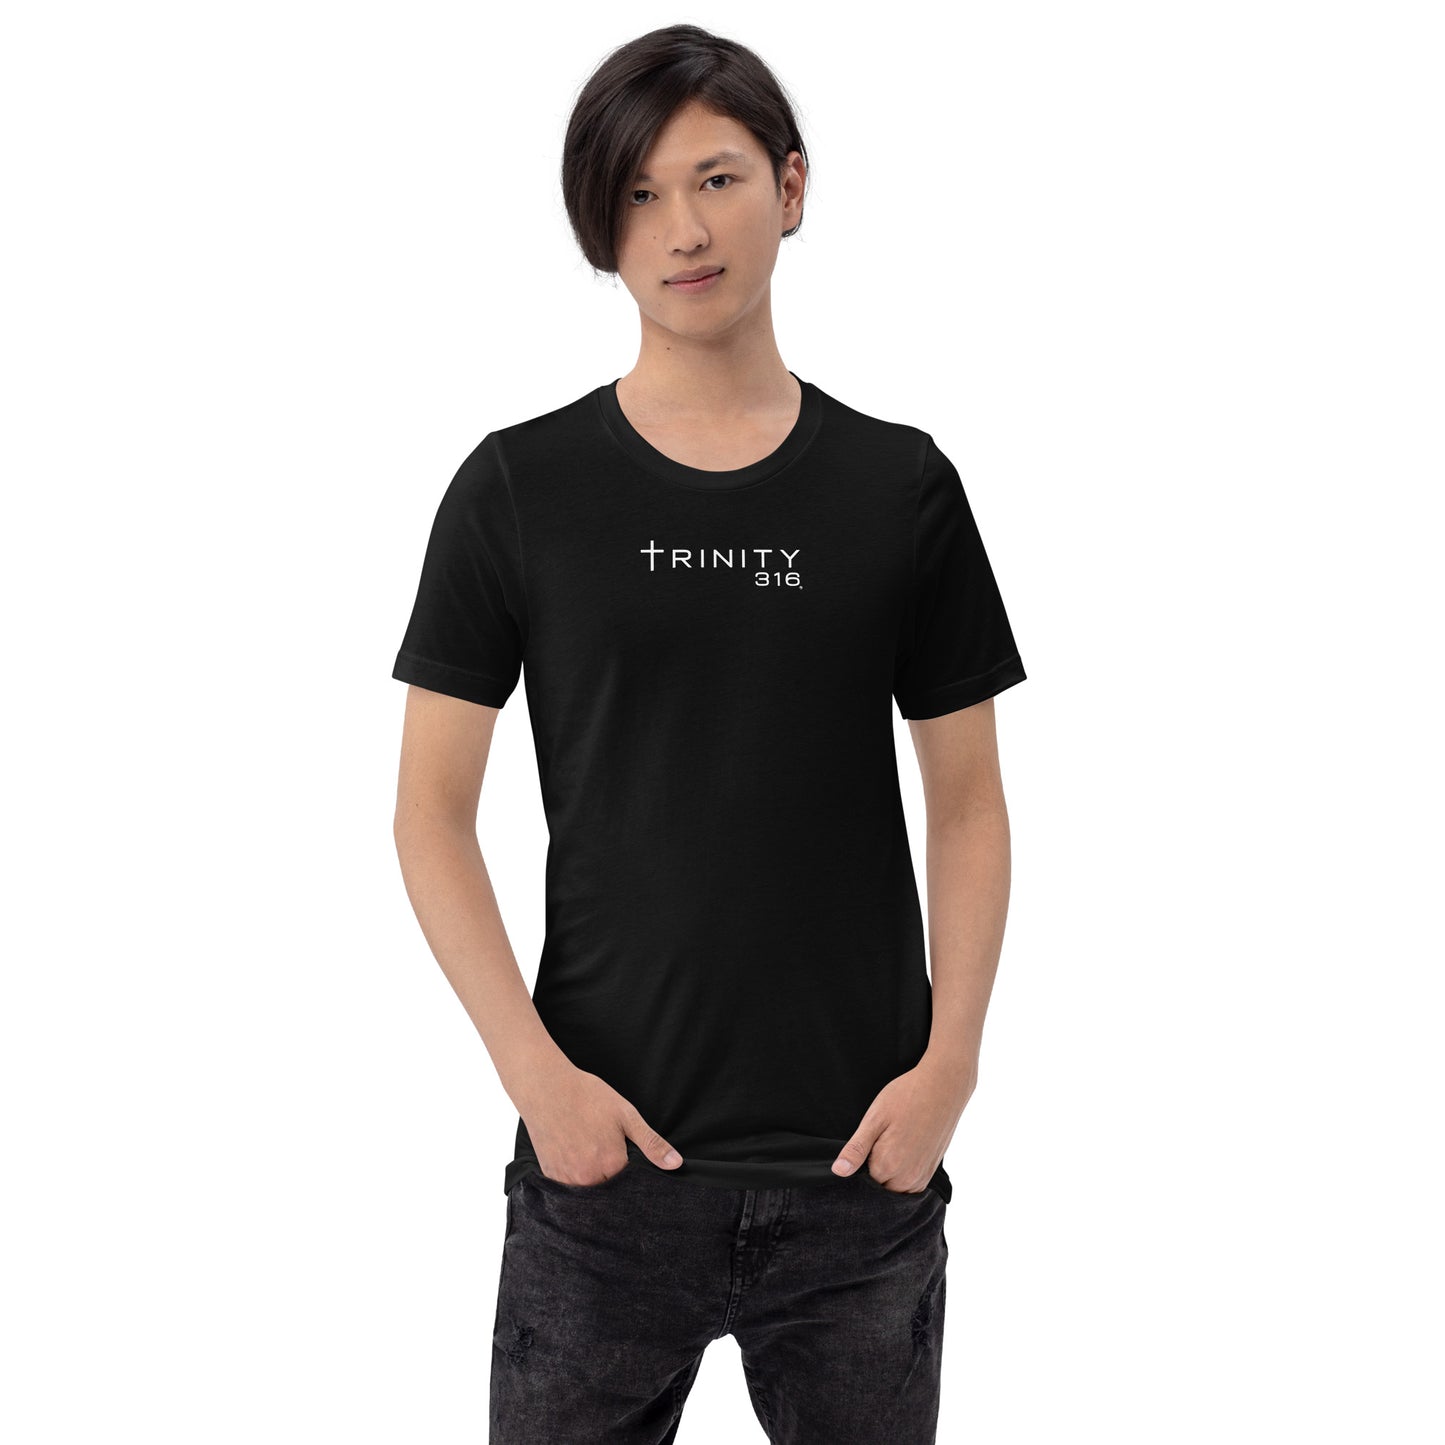 Trinity 316 T-Shirt | V2 - Black